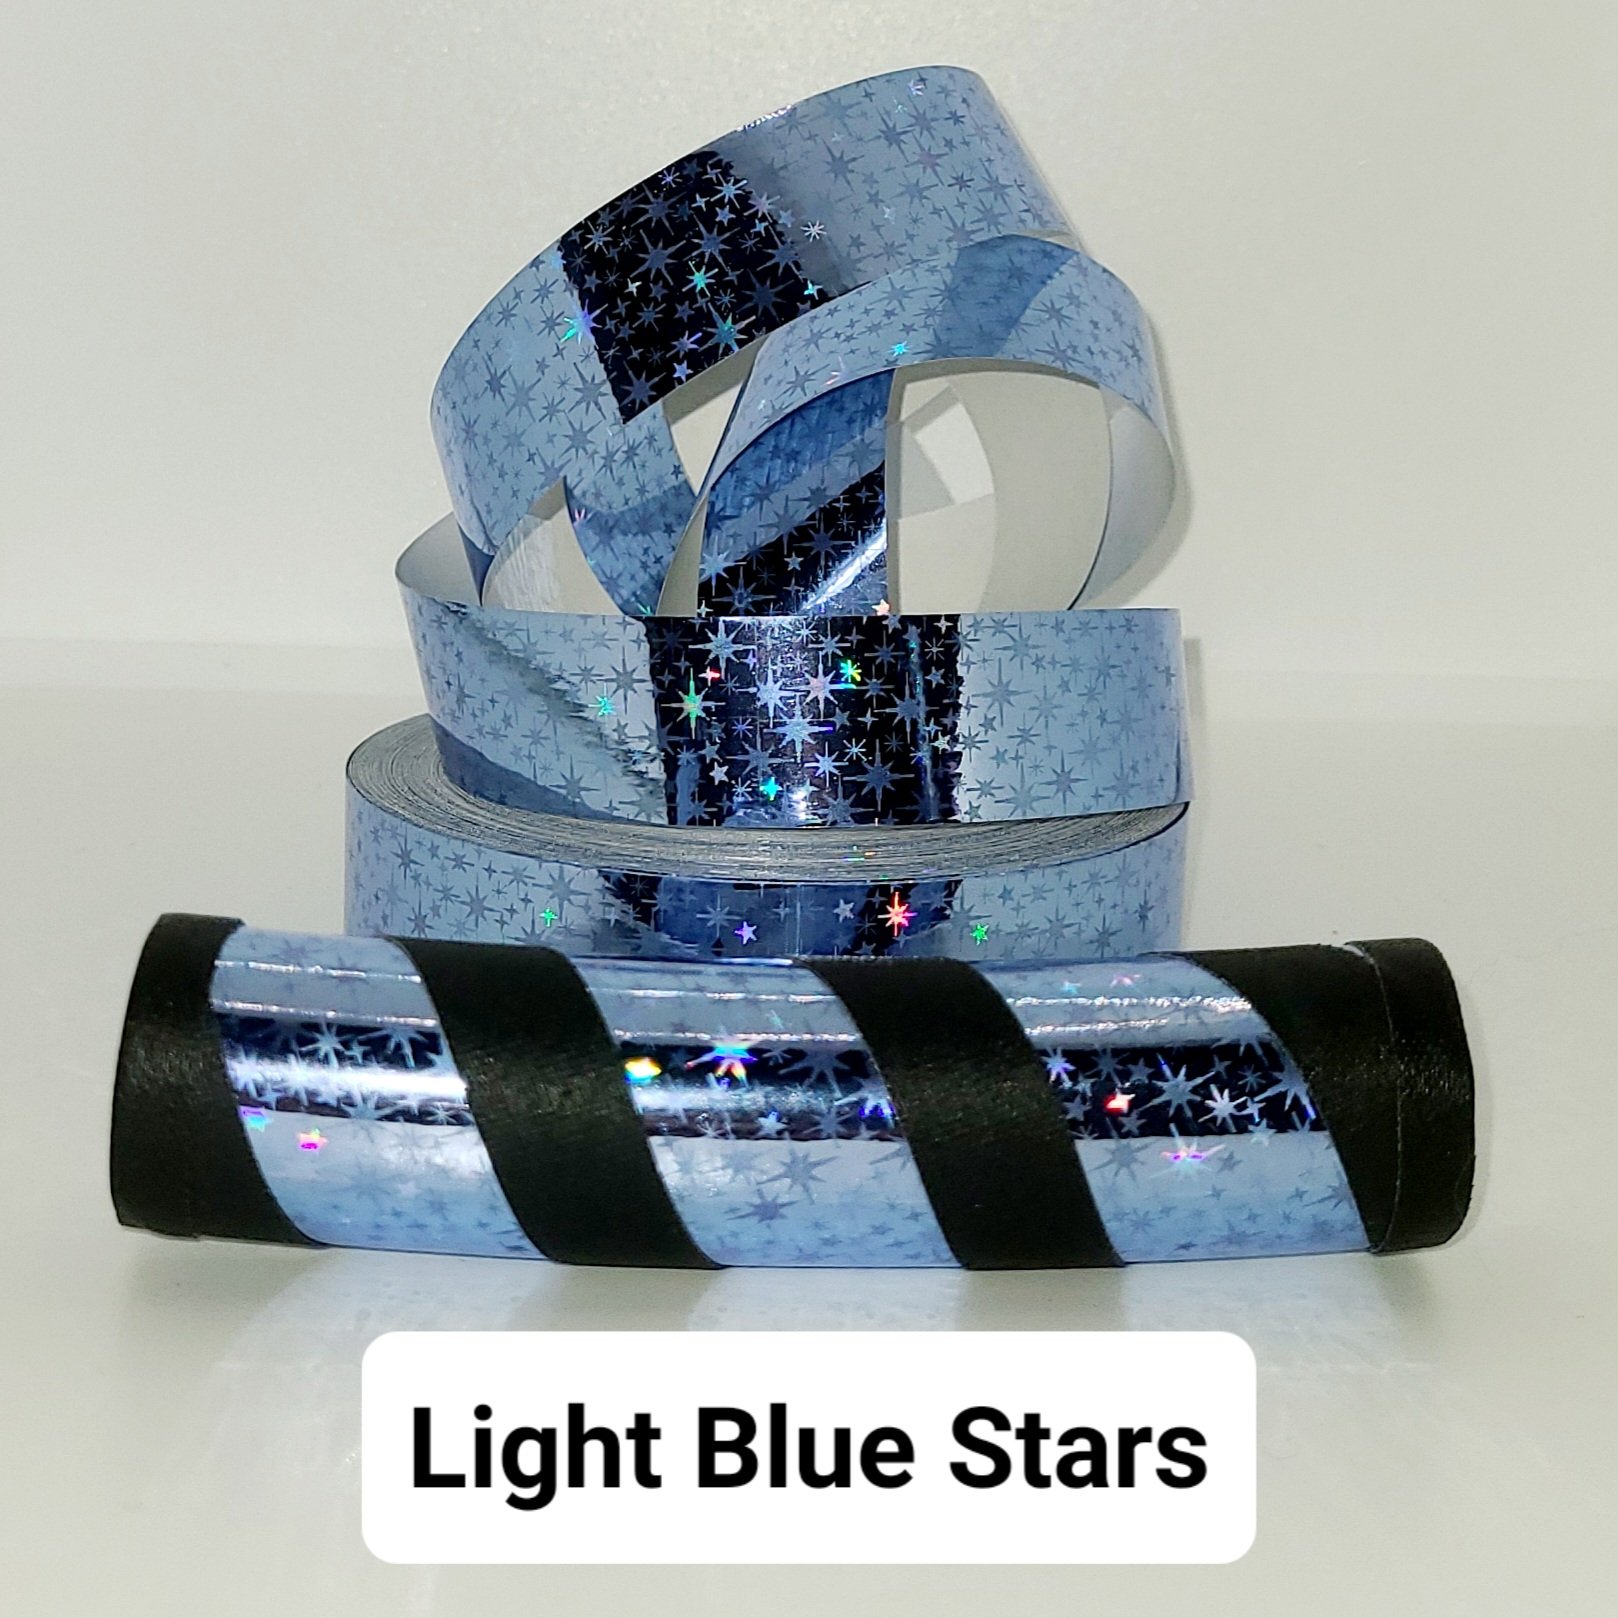 Light Blue Stars